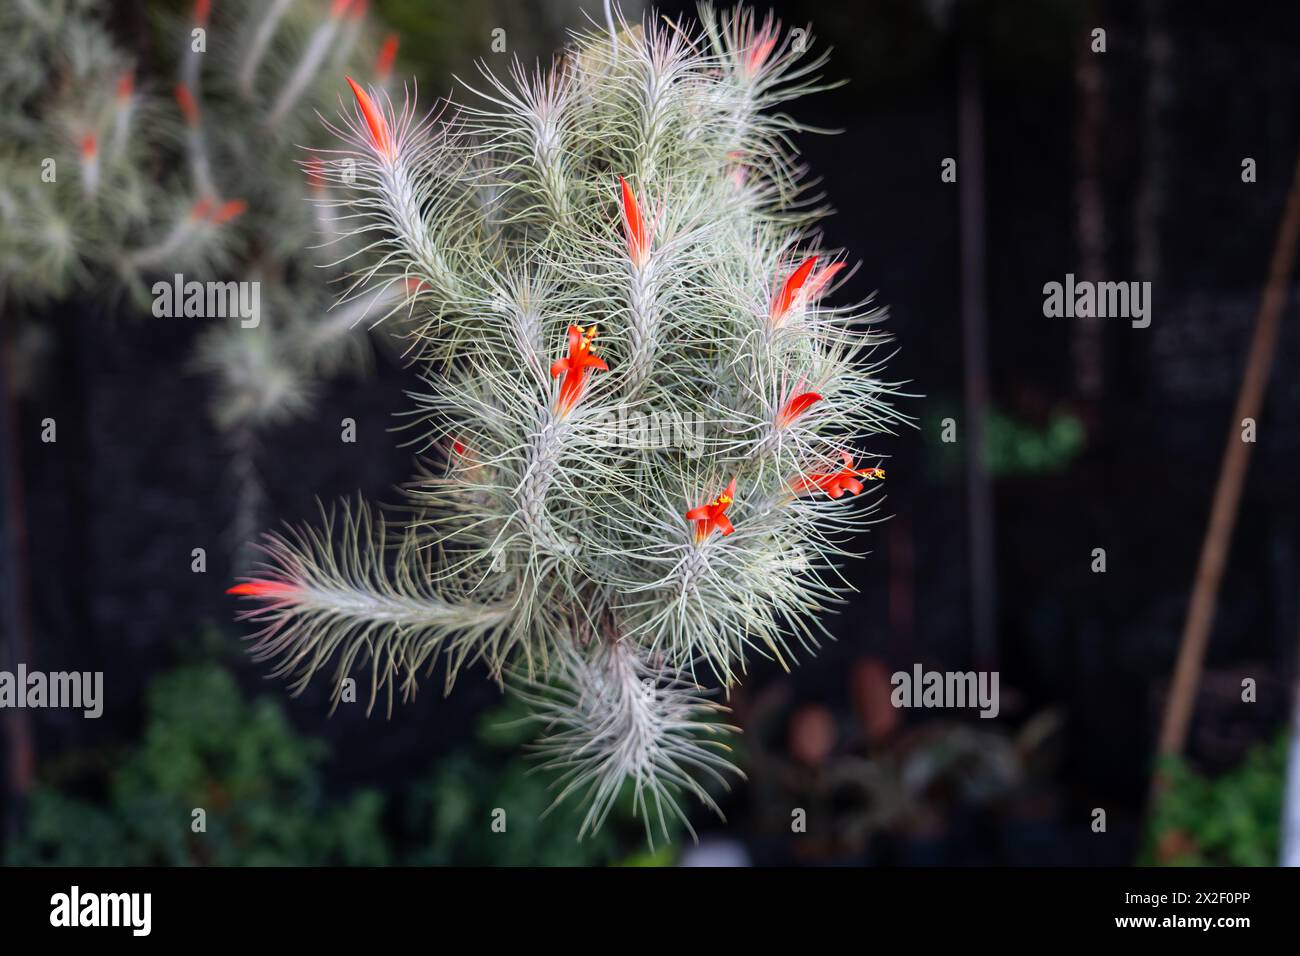 Tillandsia tillandsia heteromorpha red flower bloom or air plant that grows in hanging pots Stock Photo